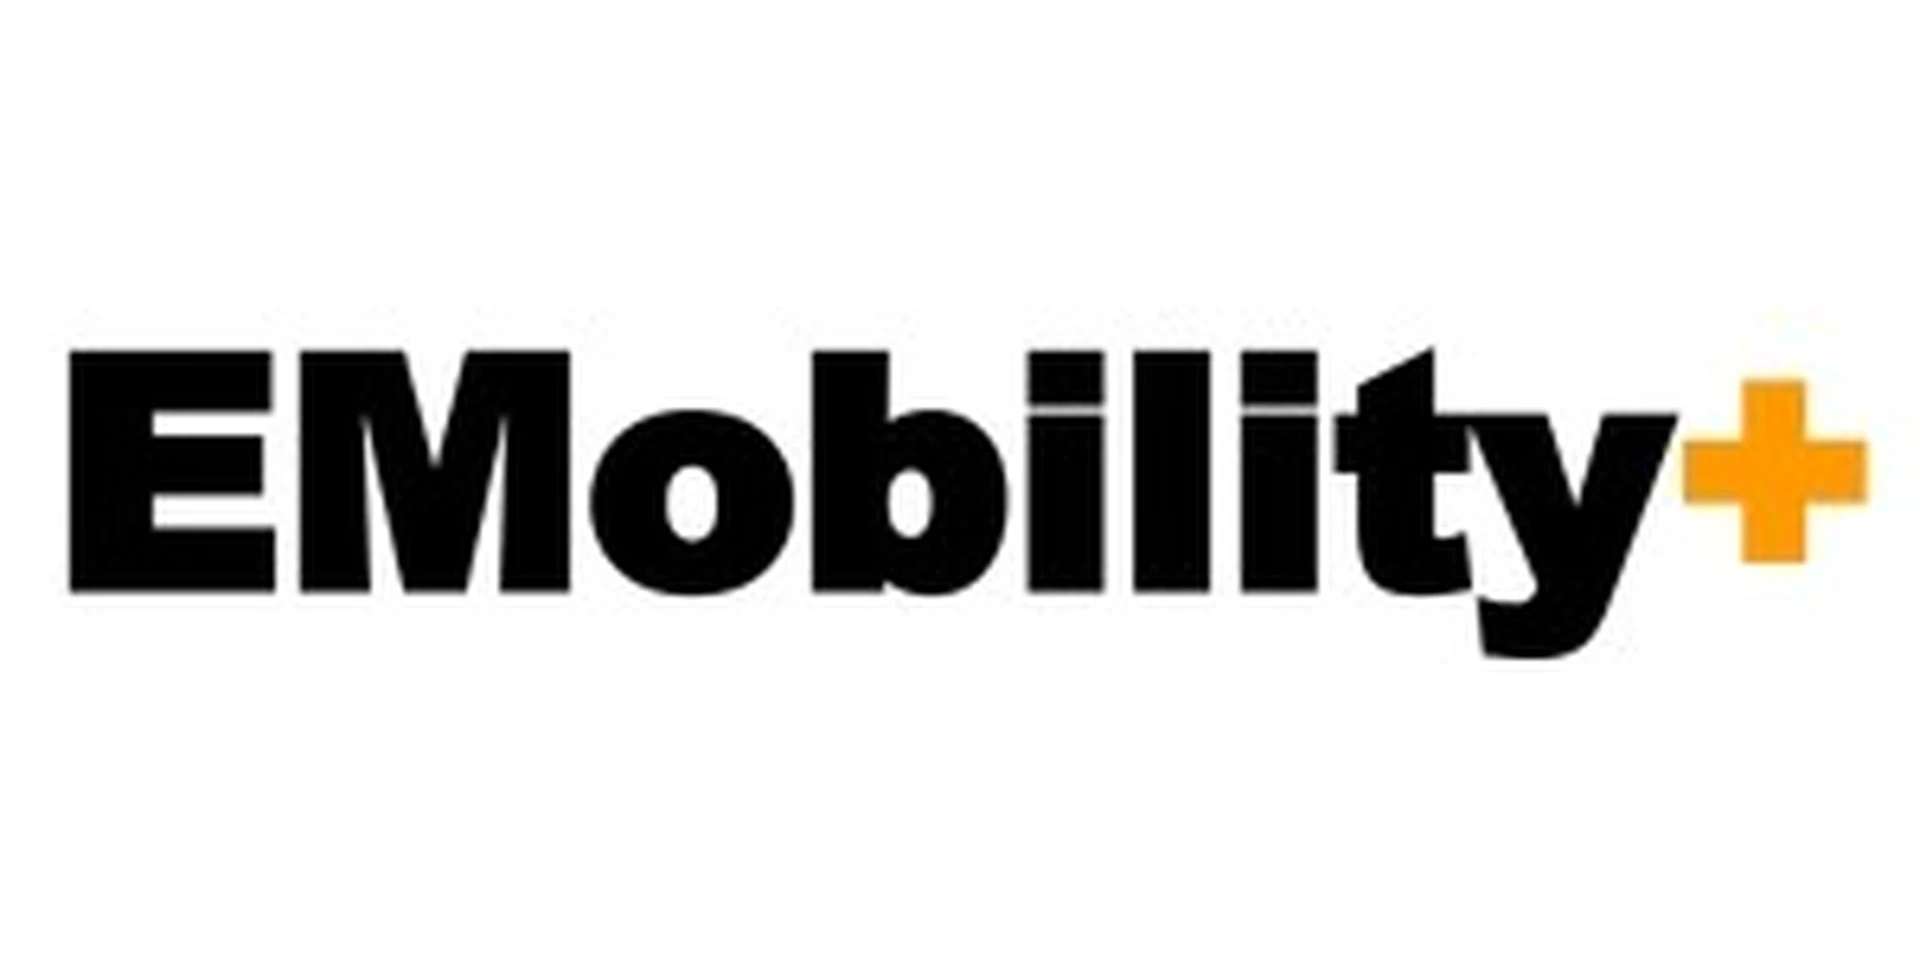 EMobility logo 300dpi v3